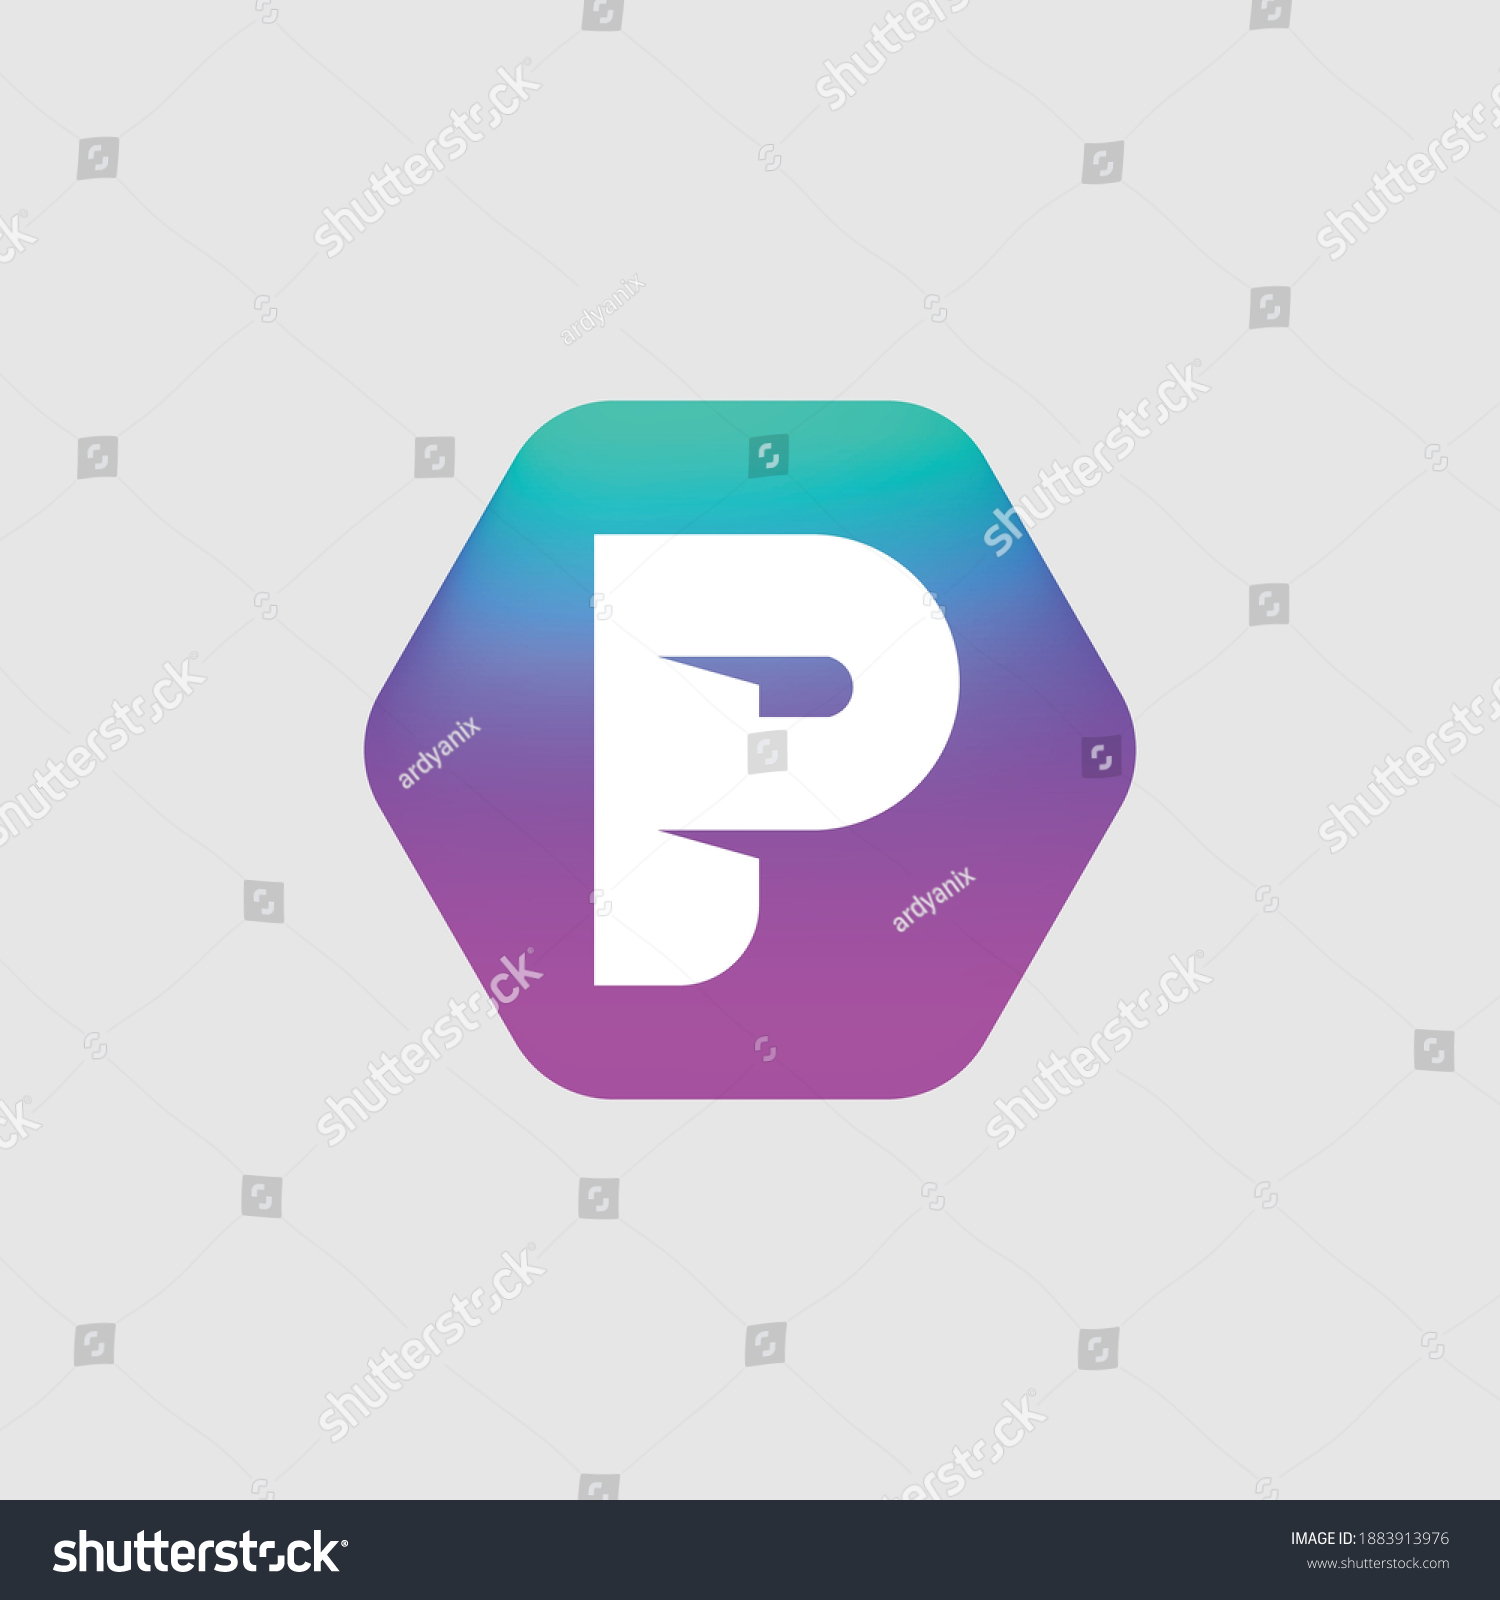 SVG of Initial Letter P Modern Logo svg